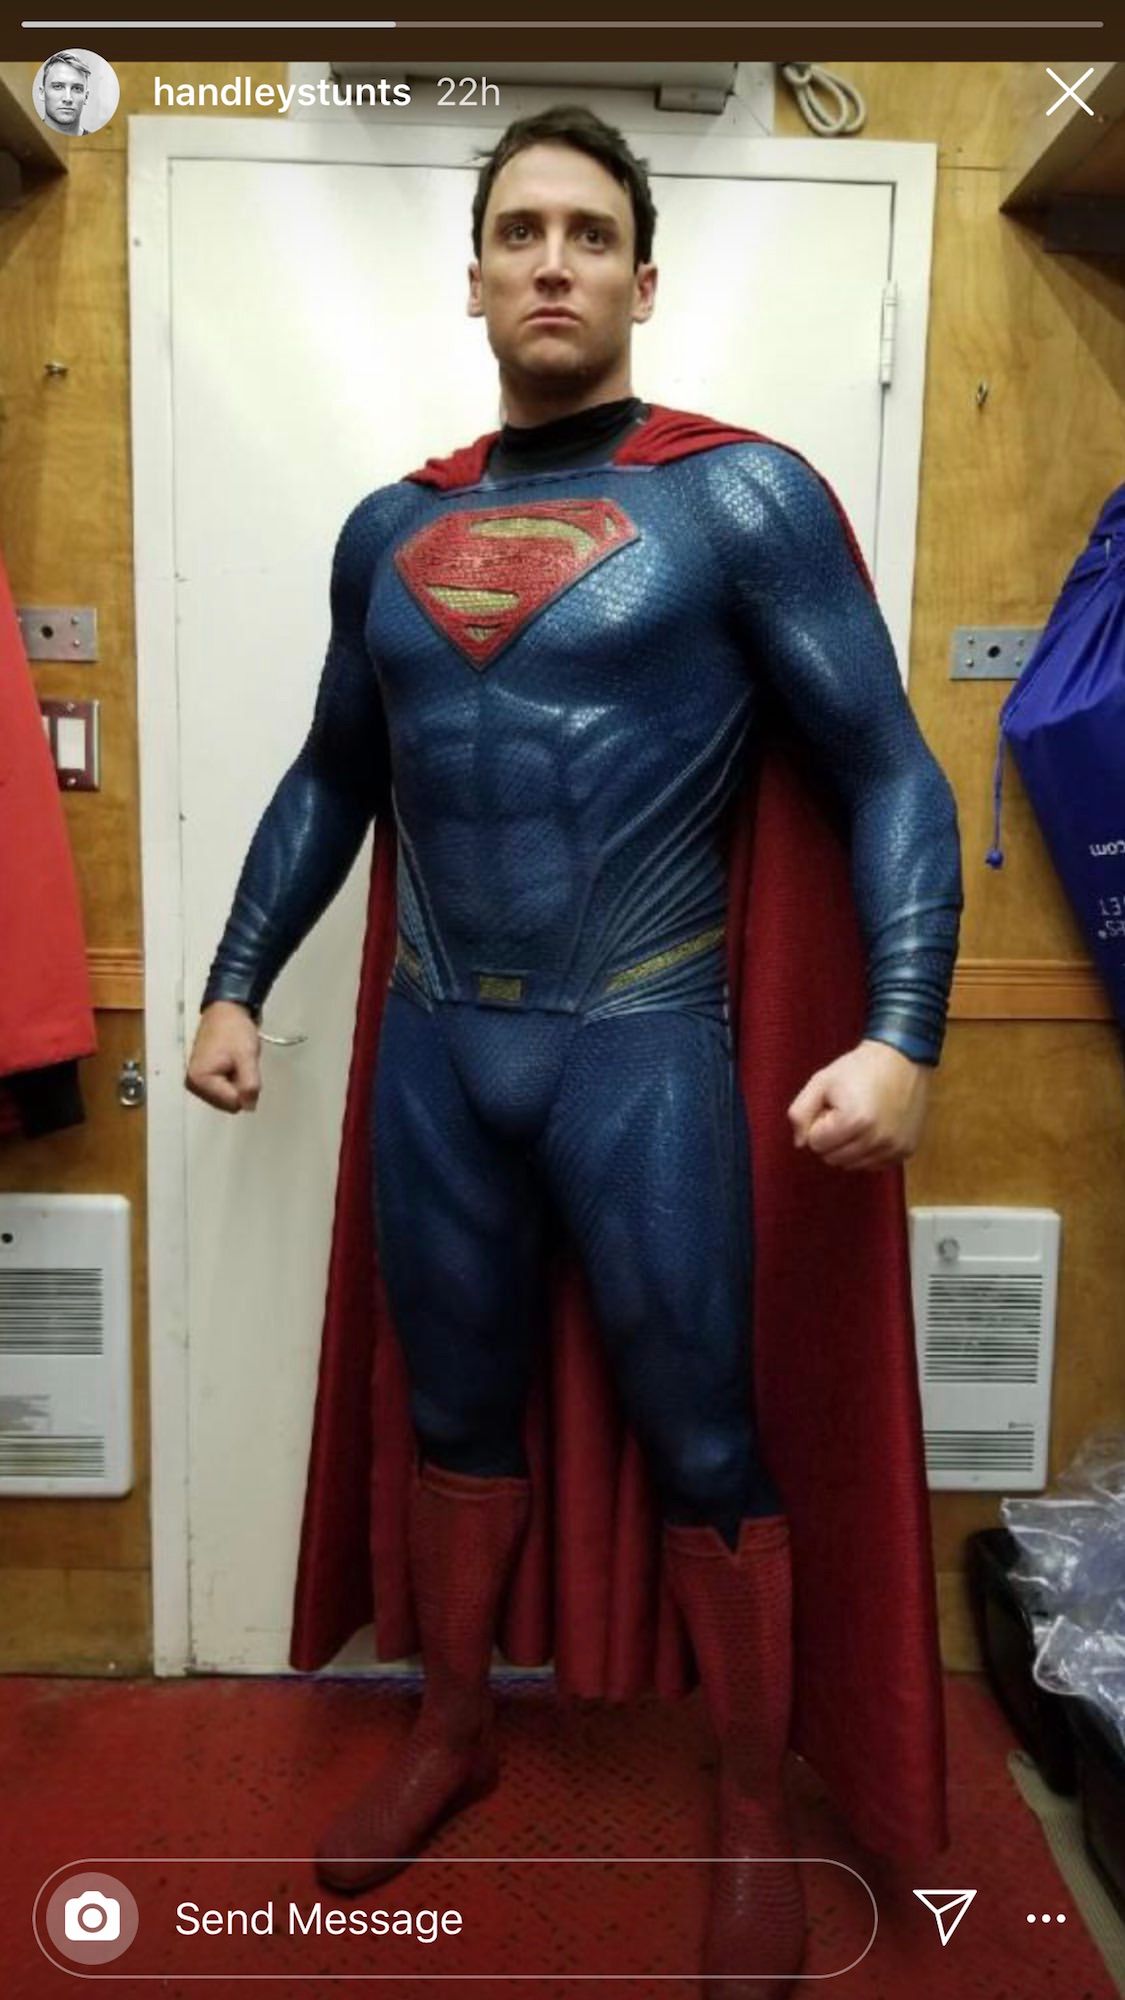 Ryan Handley in costume as Superman on set of Shazam!